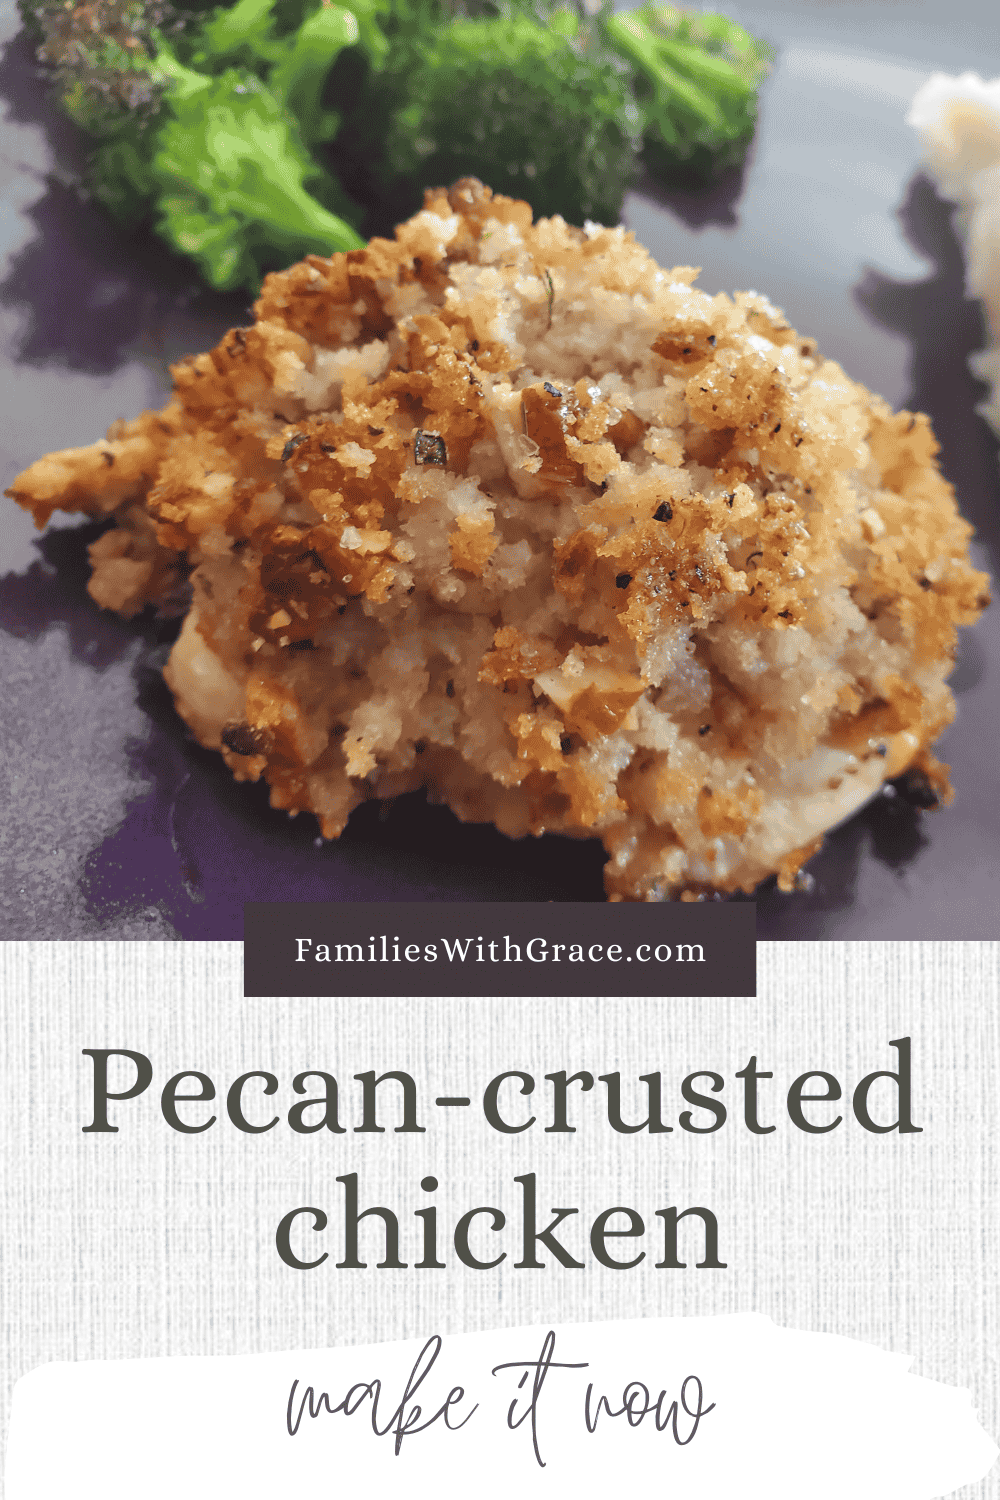 Pecan-crusted chicken recipe